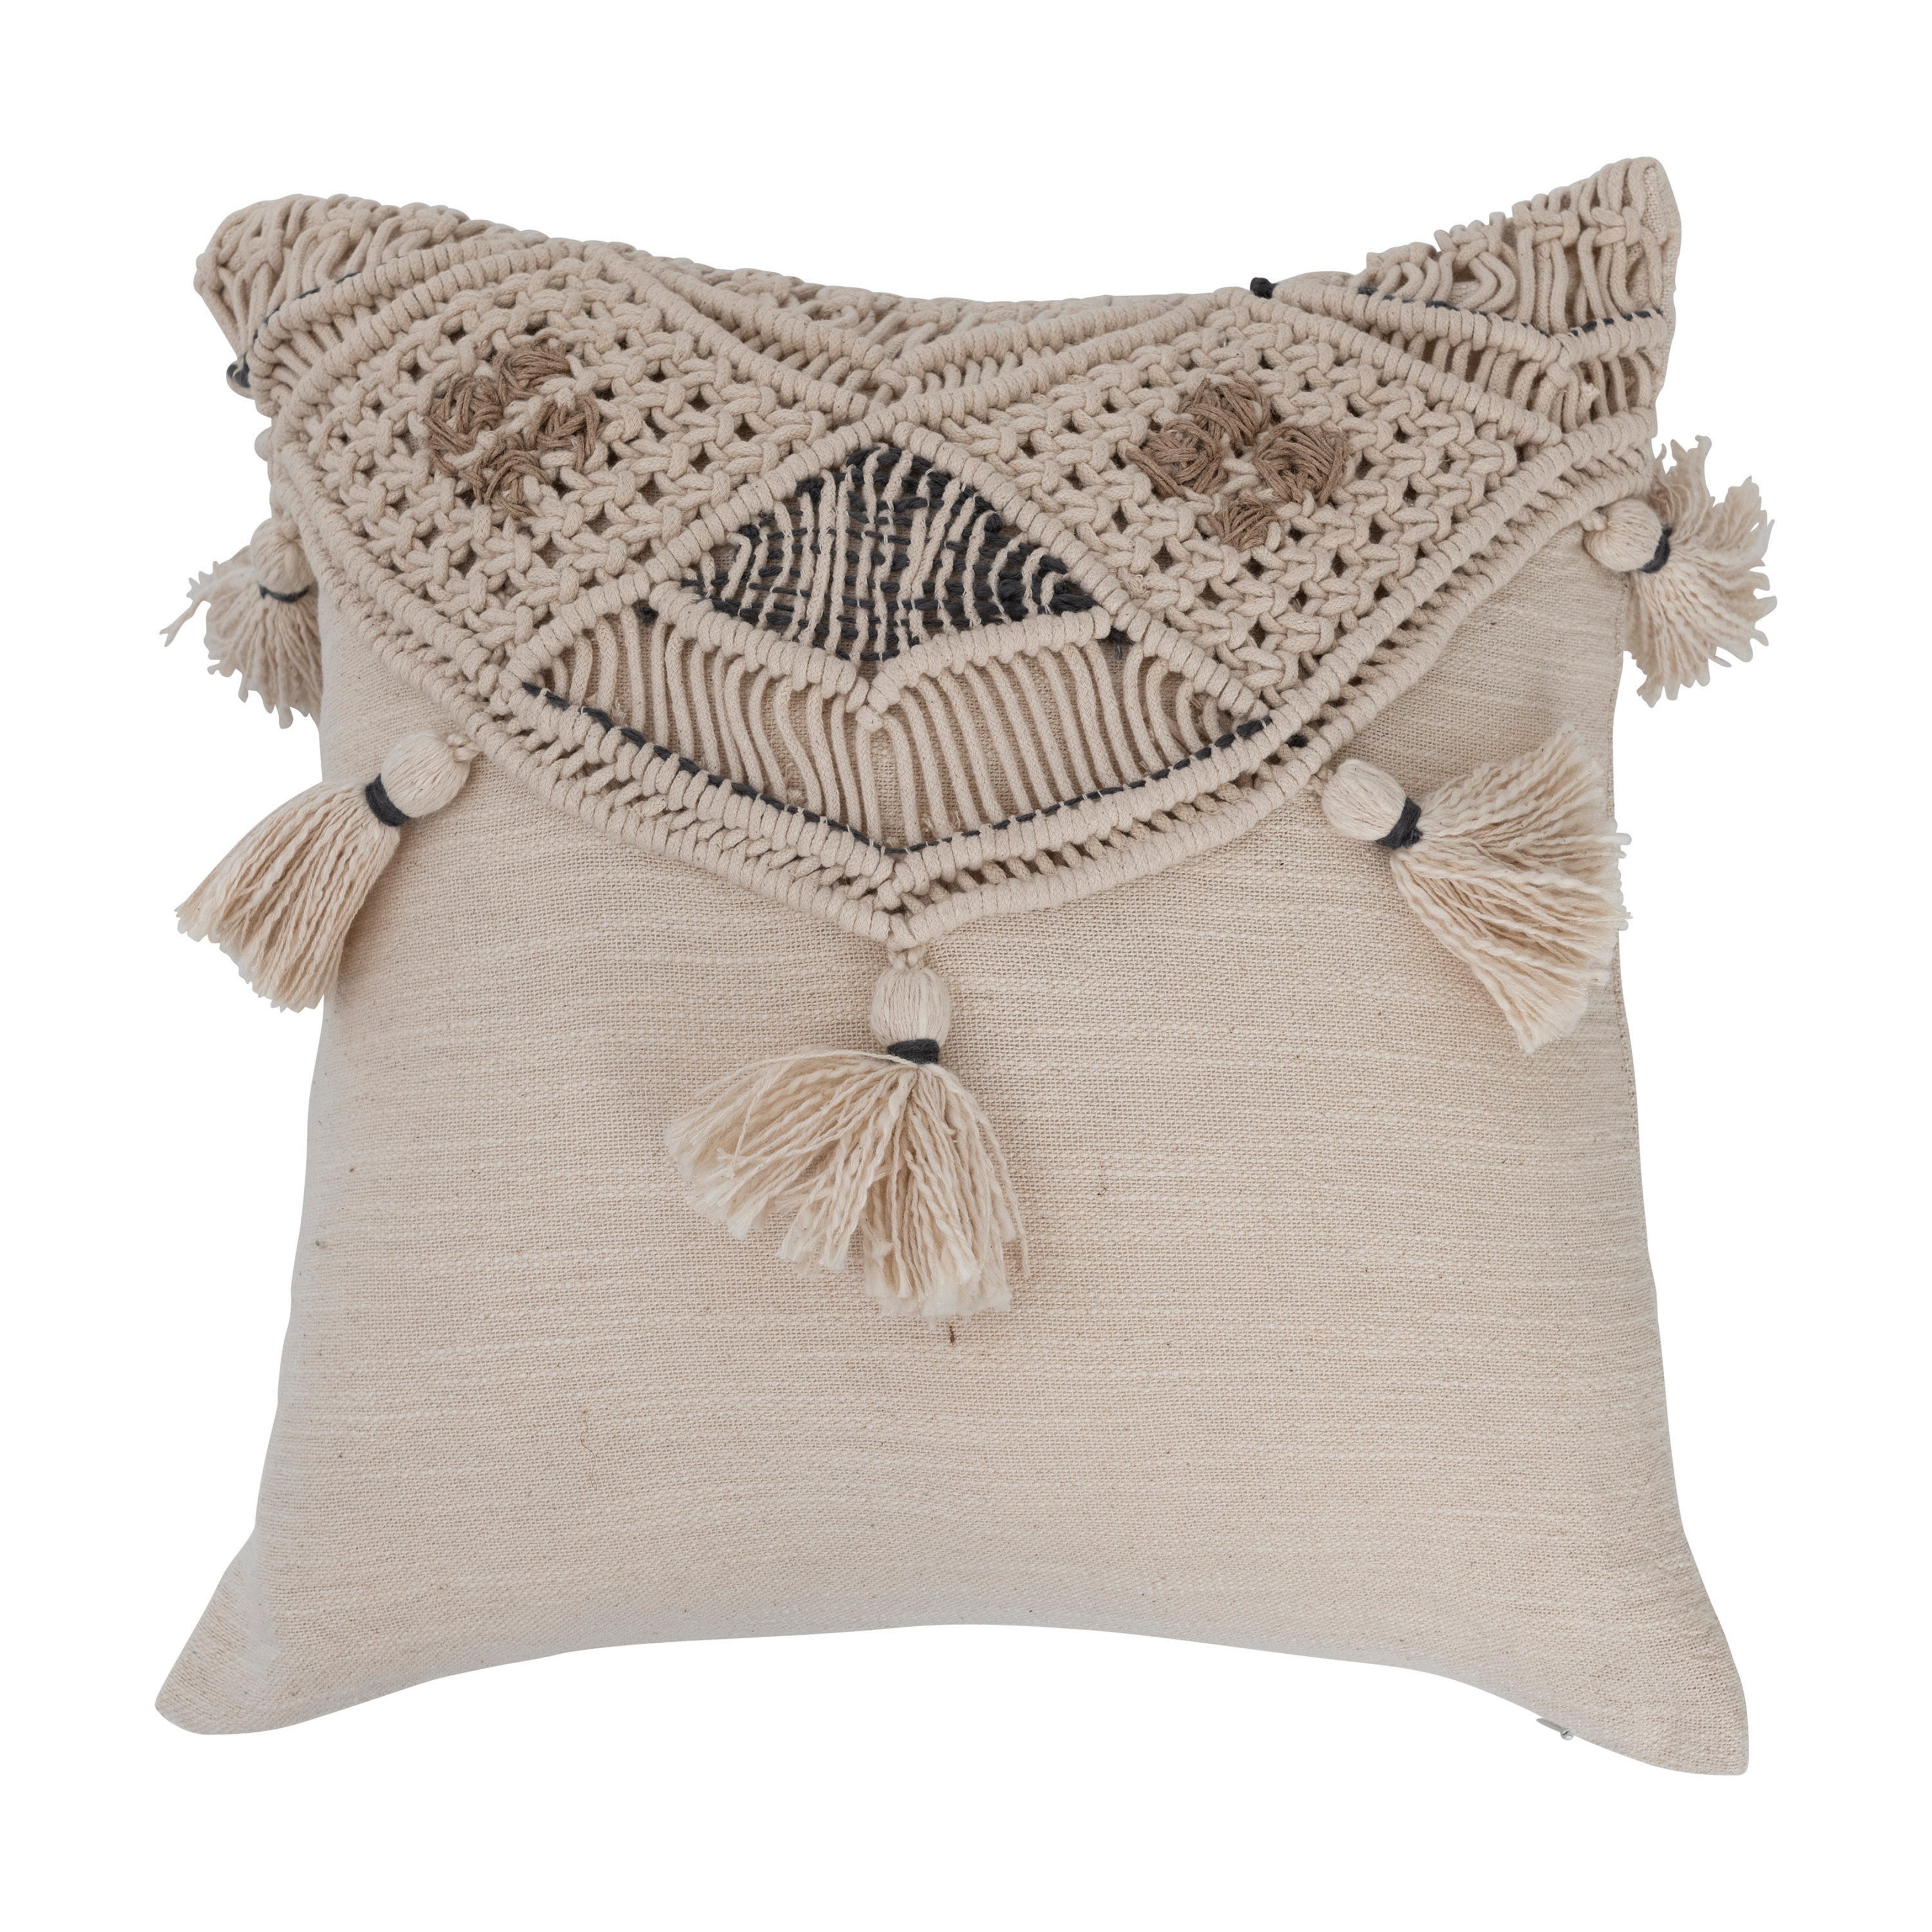 16" Square Hand-Woven Cotton & Jute Pillow w/ Macrame & Tassels, Multi Color